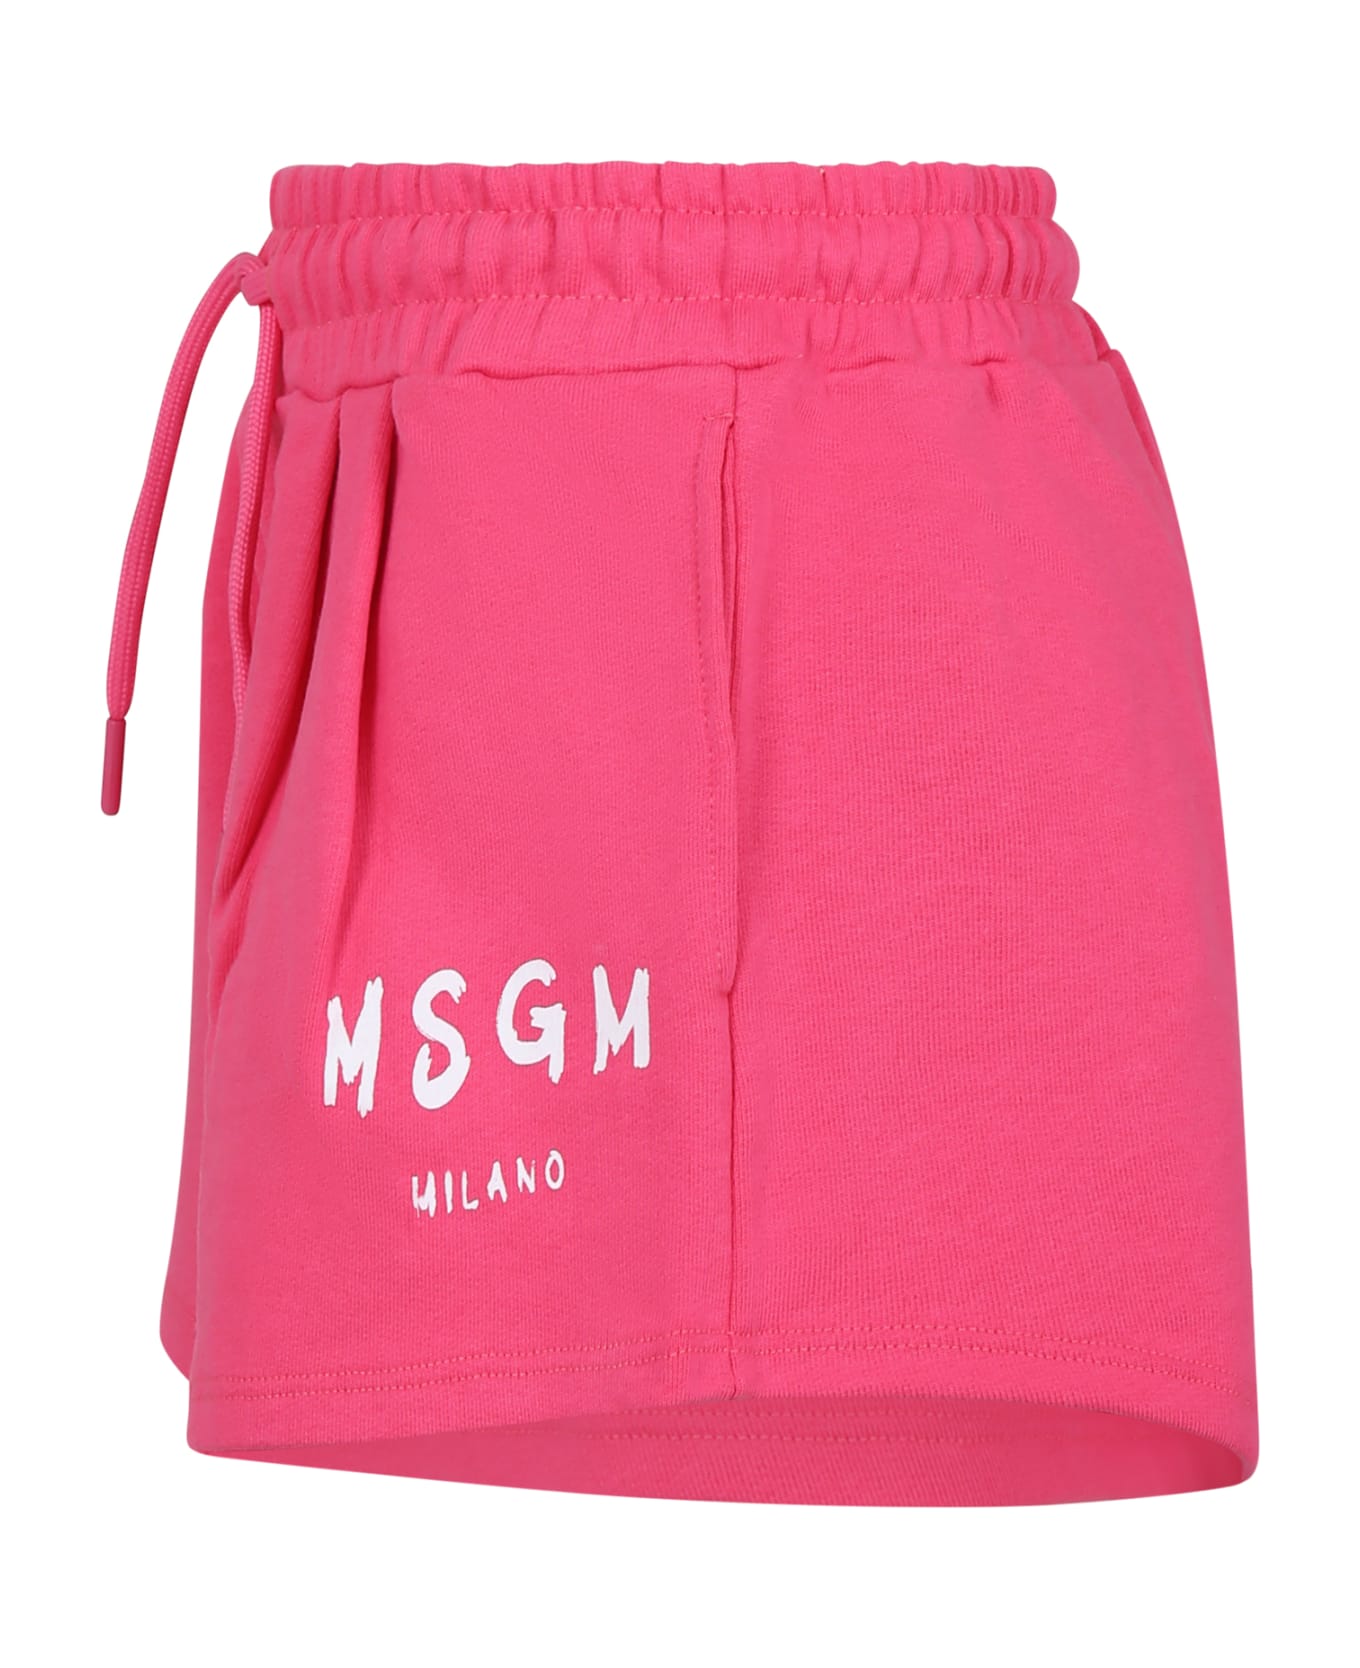 MSGM Fuchsia Shorts For Girl With Logo - Fucsia